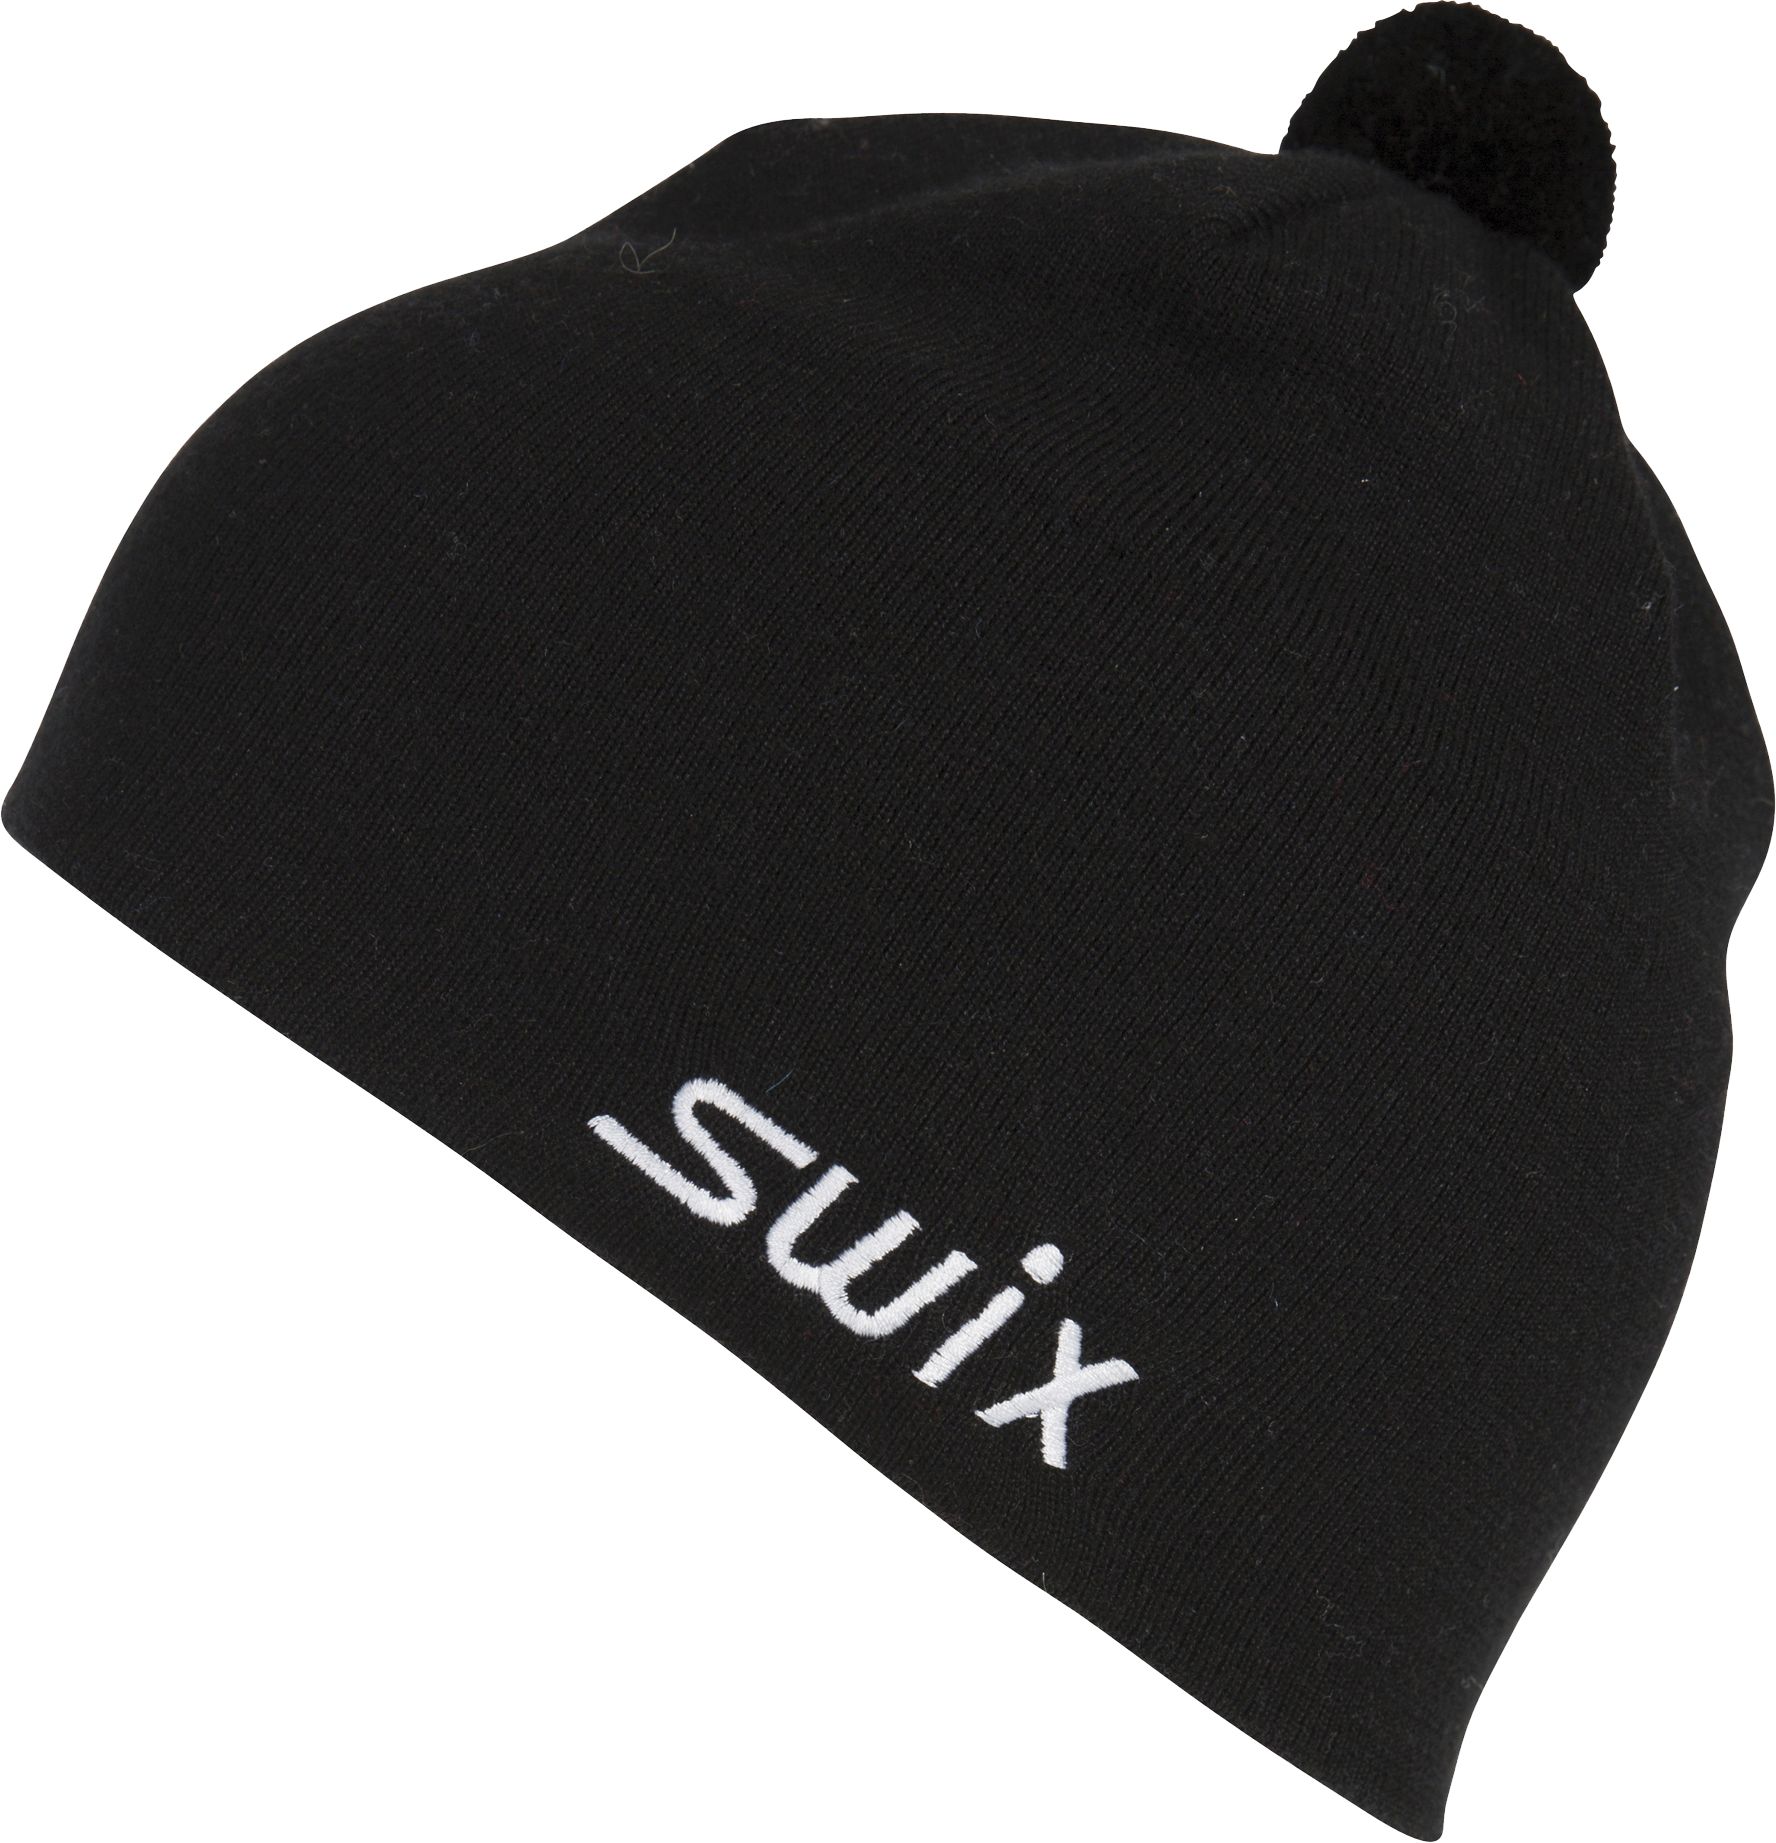 SWIX Tradition hat på stadium.se